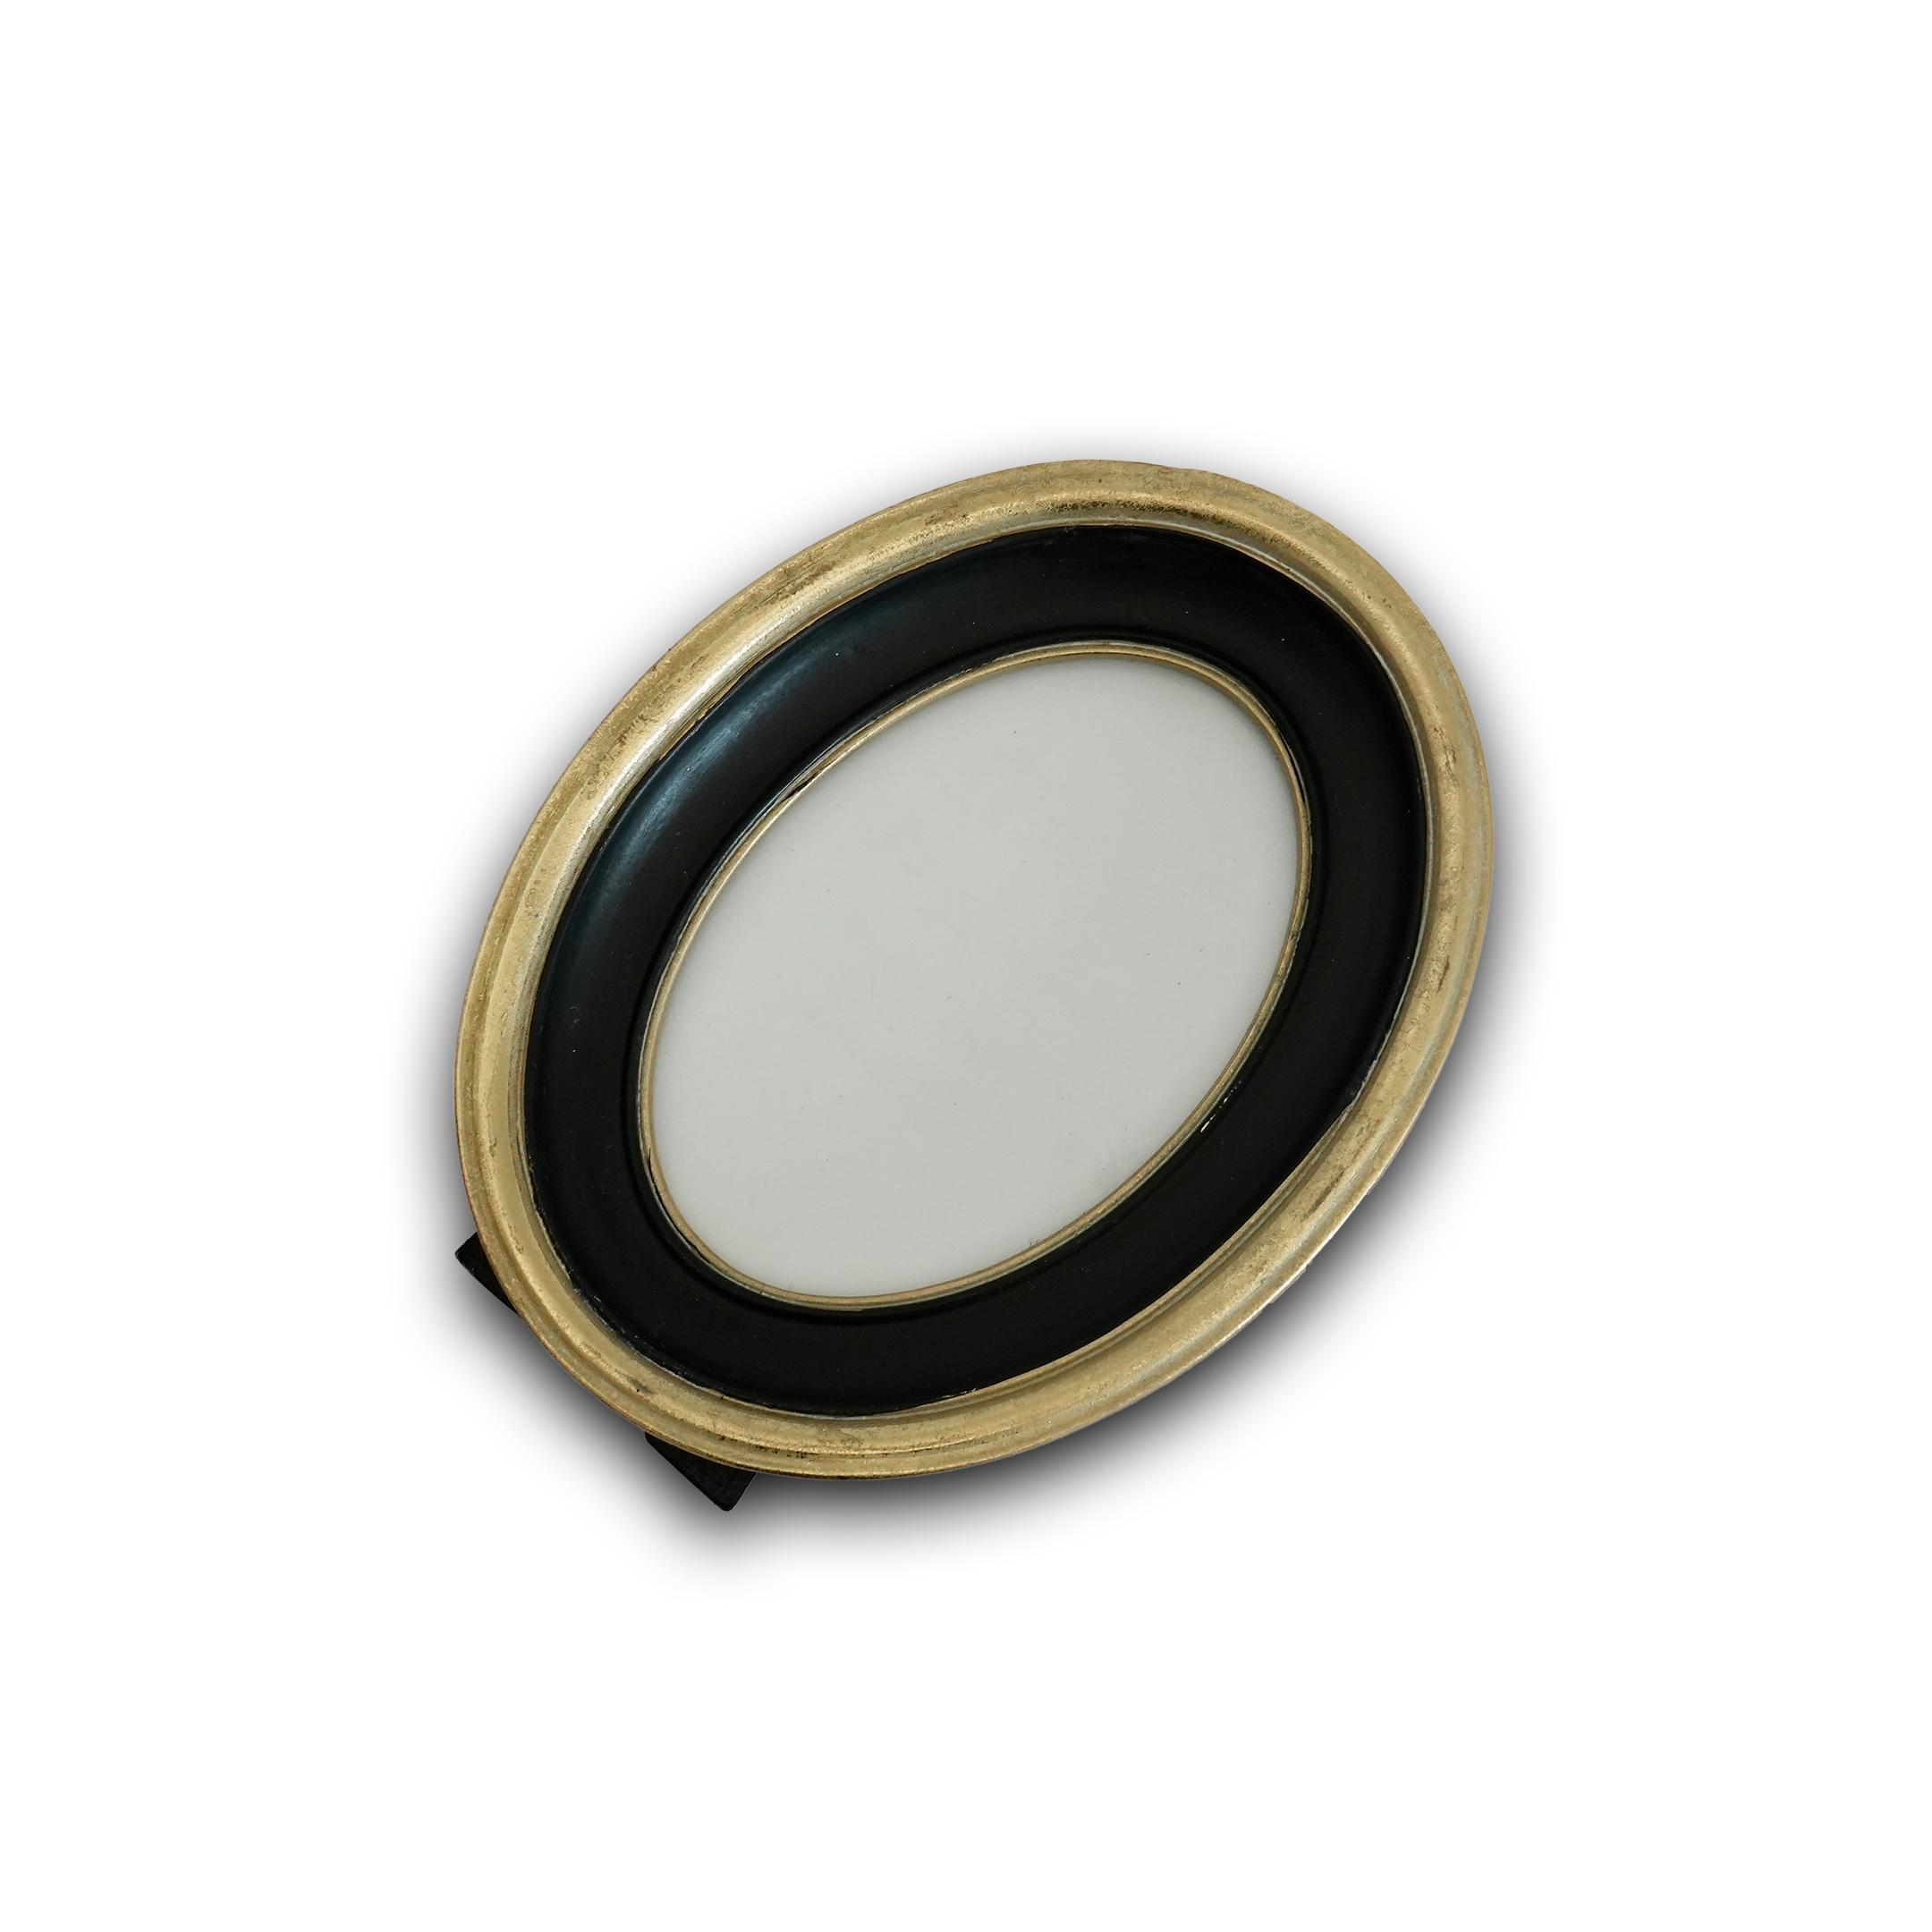 Portafoto ovale Arpimex ovale color oro 16cm x 20,7cm x 3cm